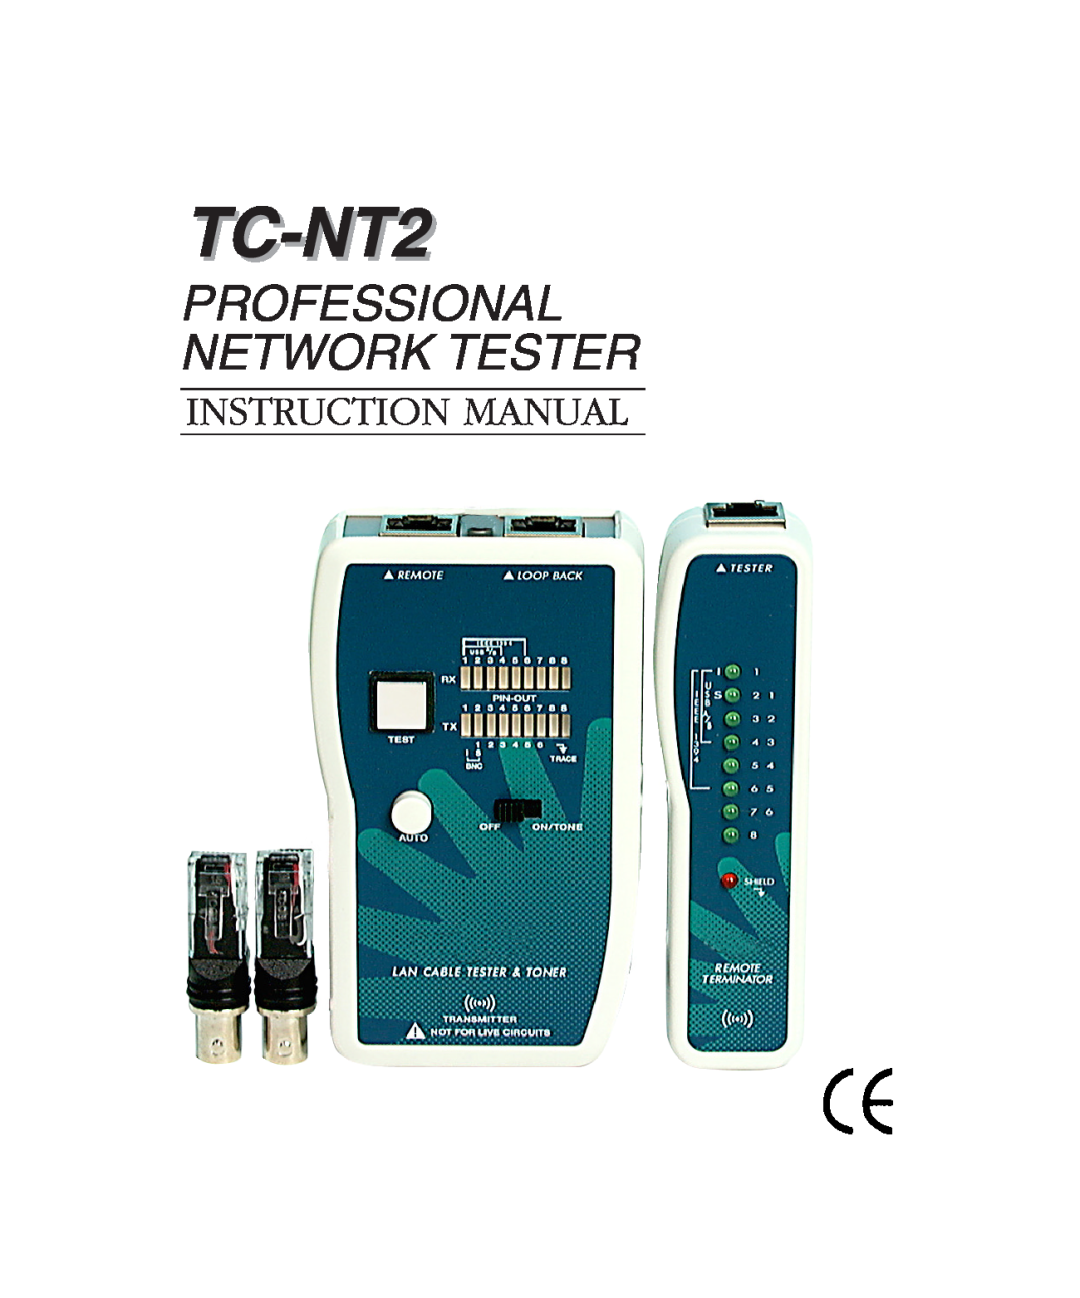 TRENDnet TC-NT2 instruction manual Professional Network Tester 